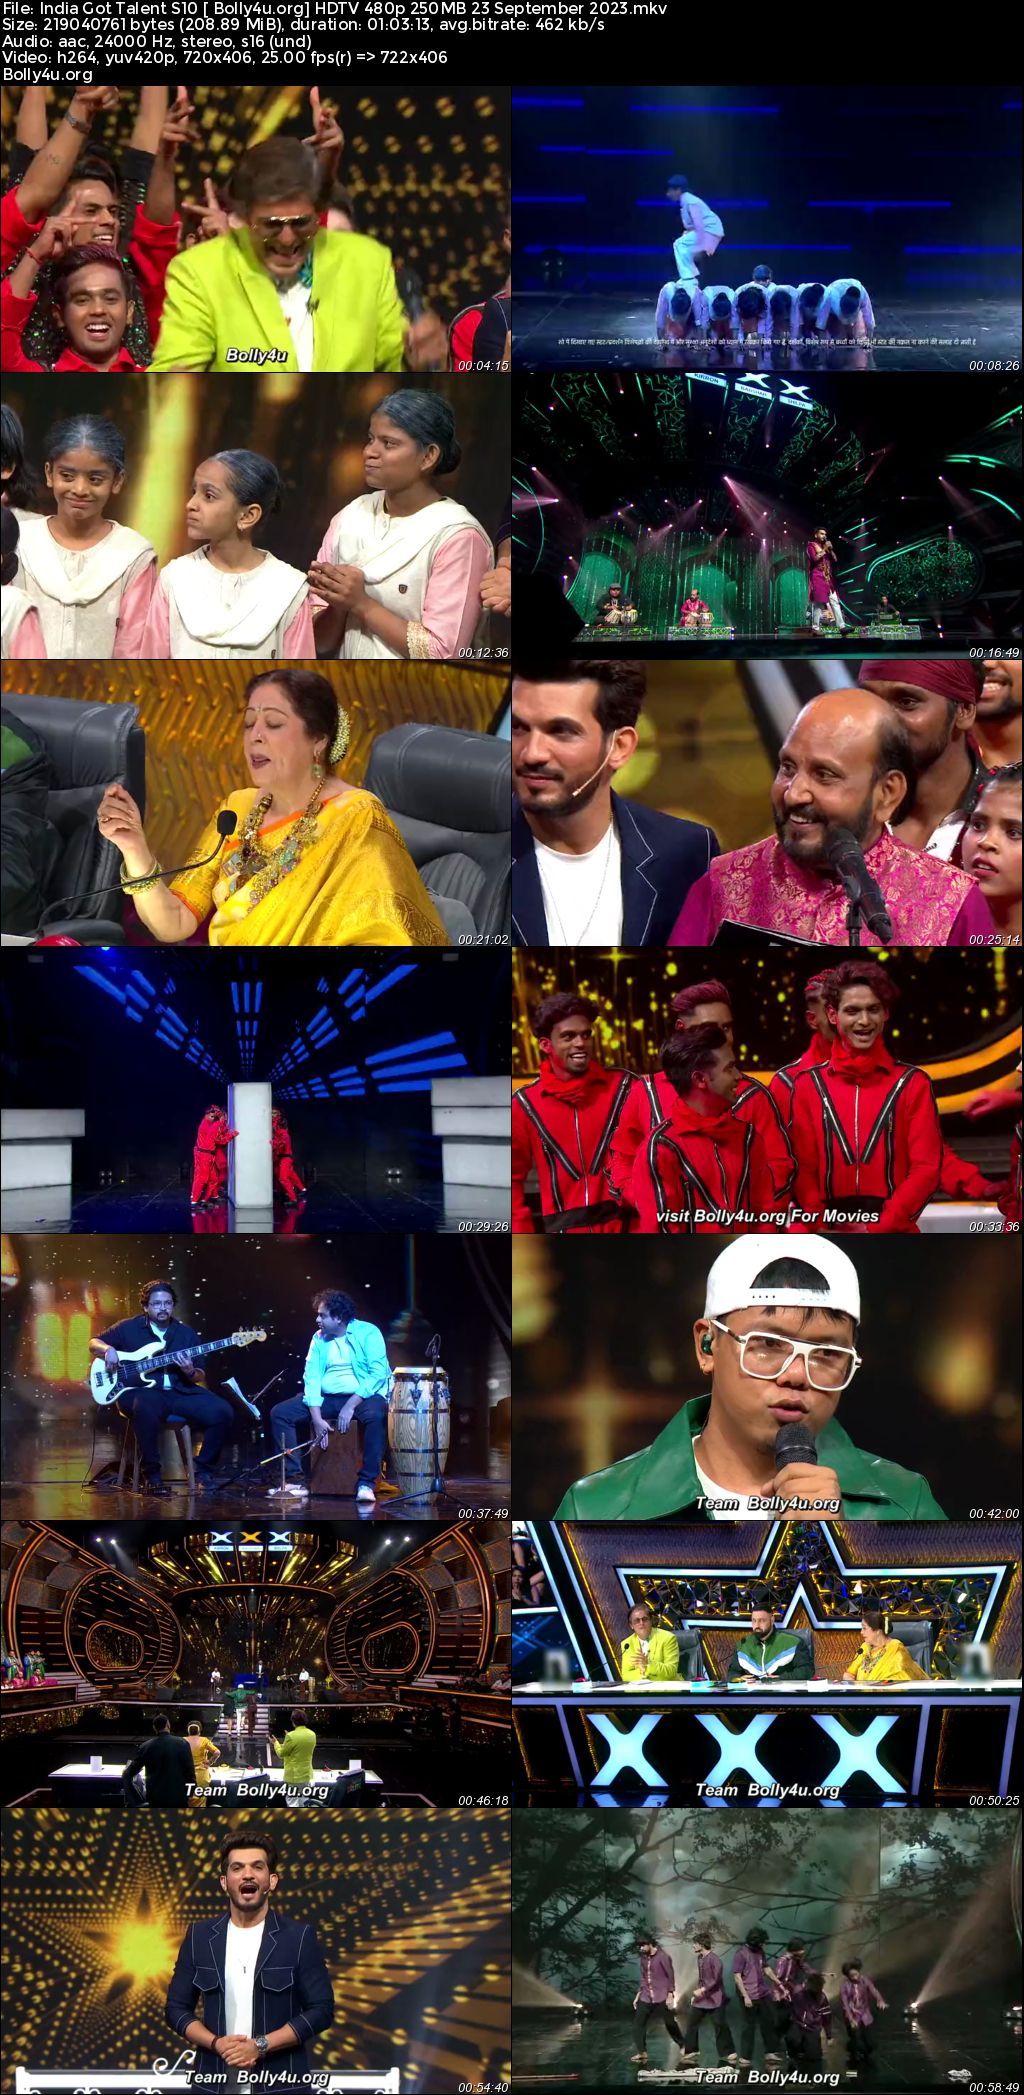 India Got Talent S10 HDTV 480p 250MB 23 September 2023 Download